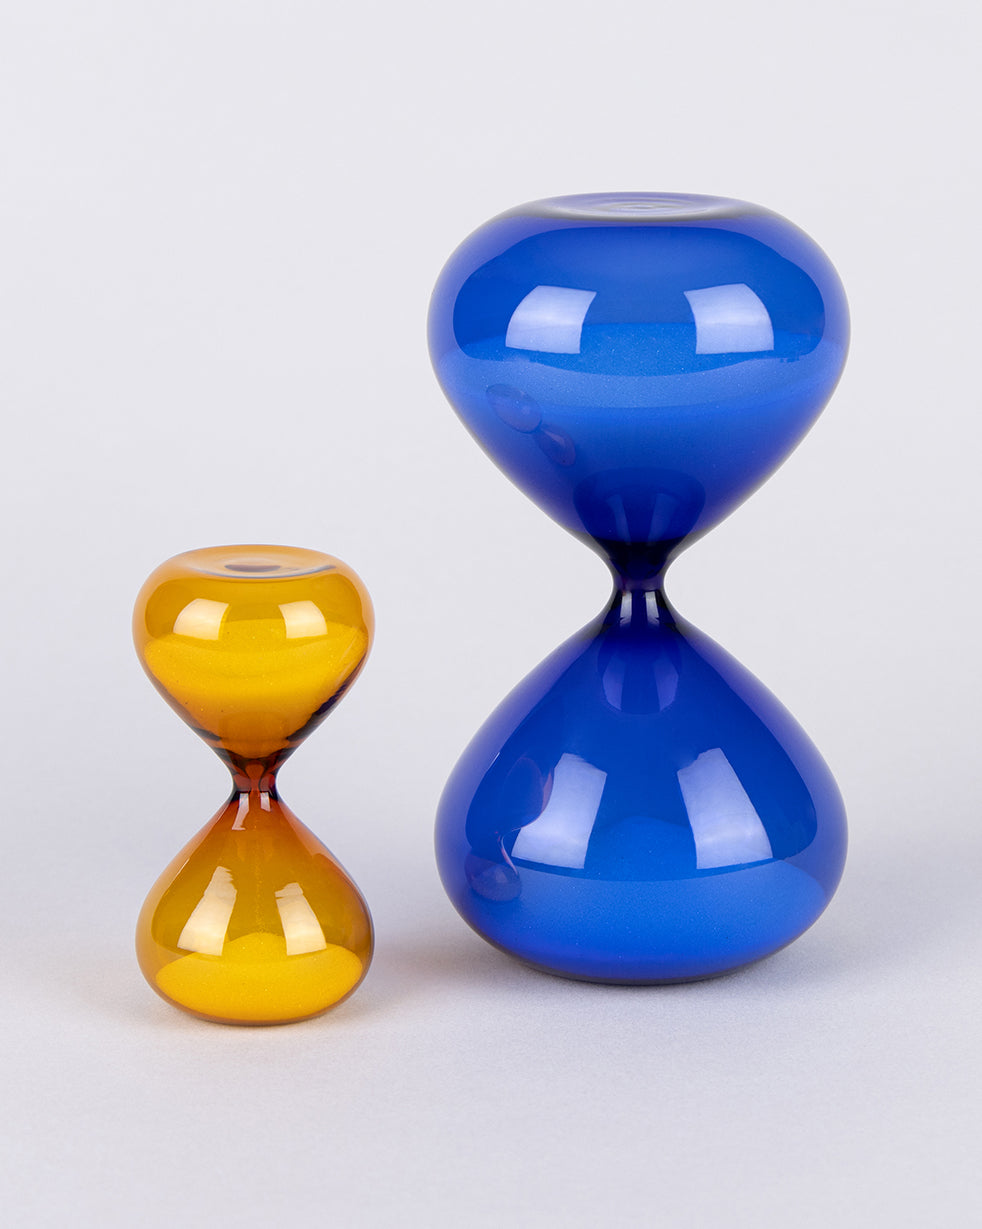 Hourglass | 5 minutes